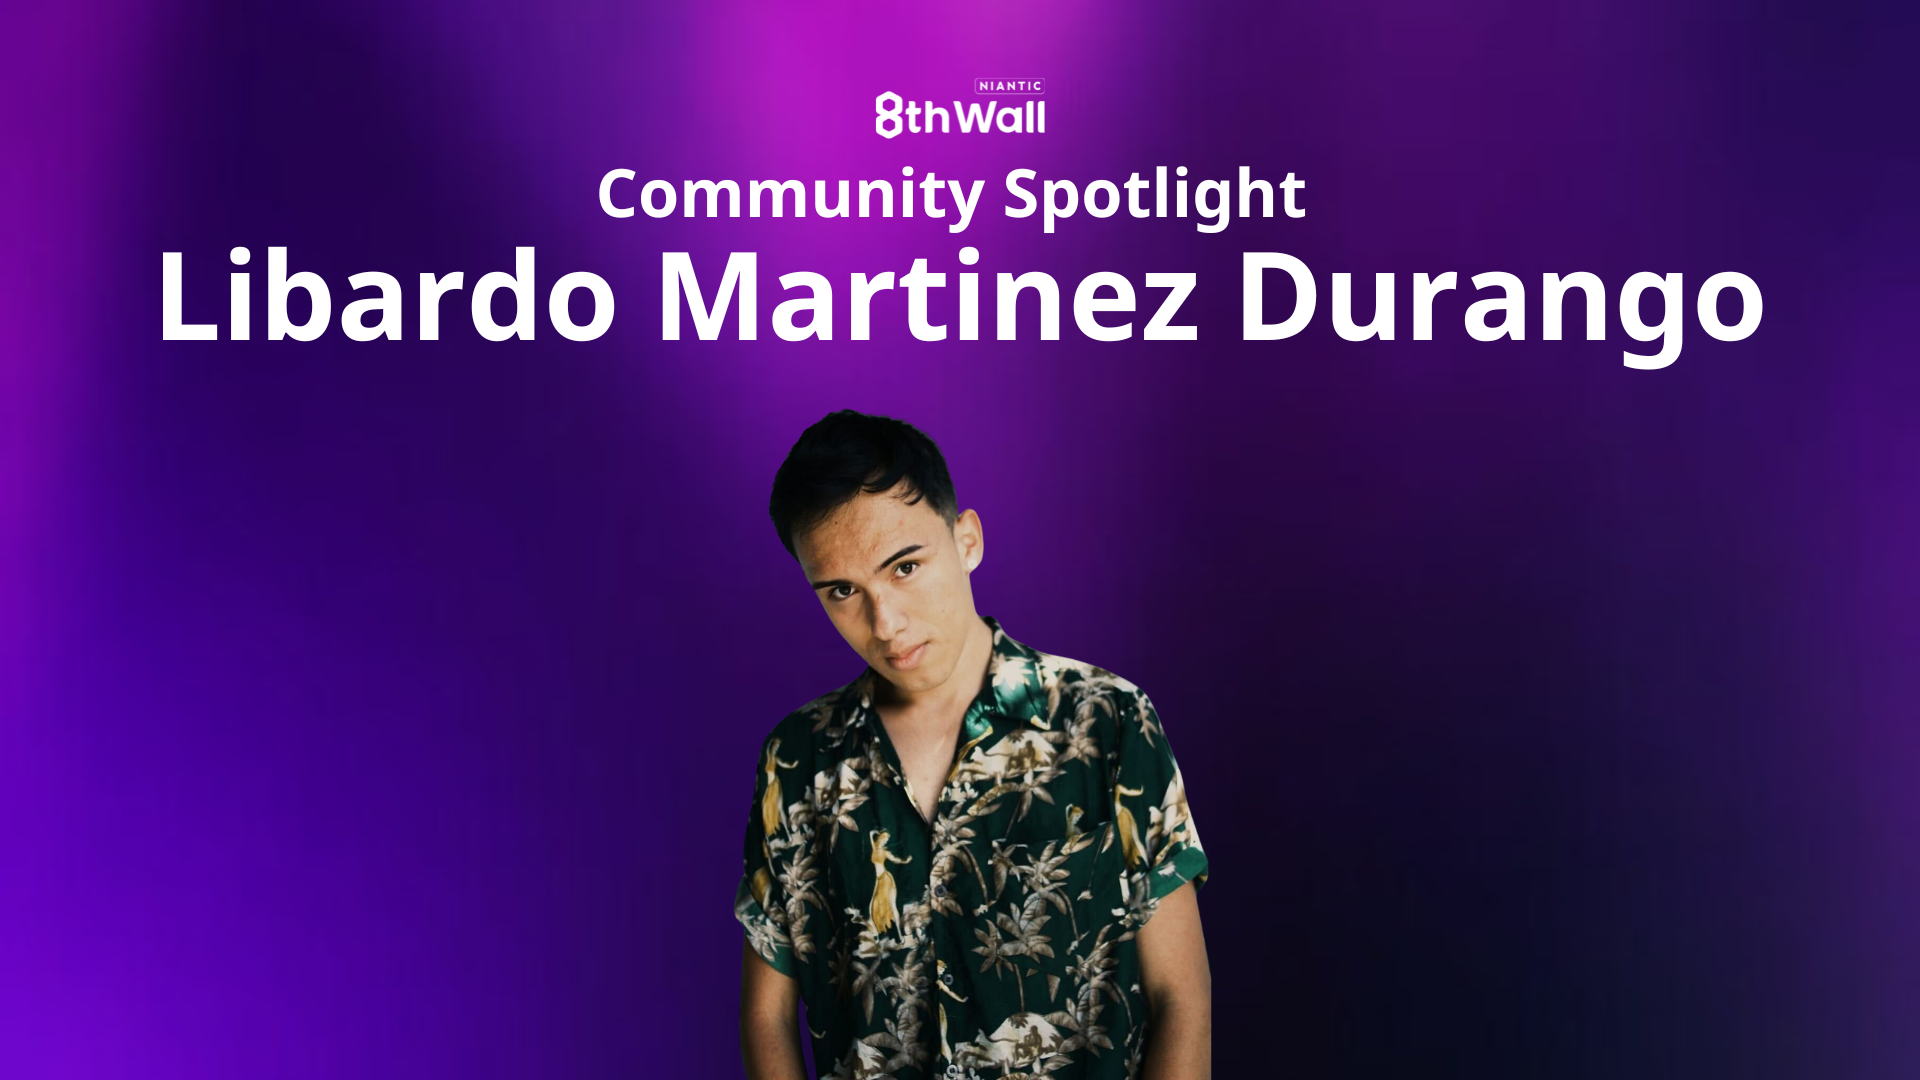 Community Spotlight: Meet Libardo Martinez Durango